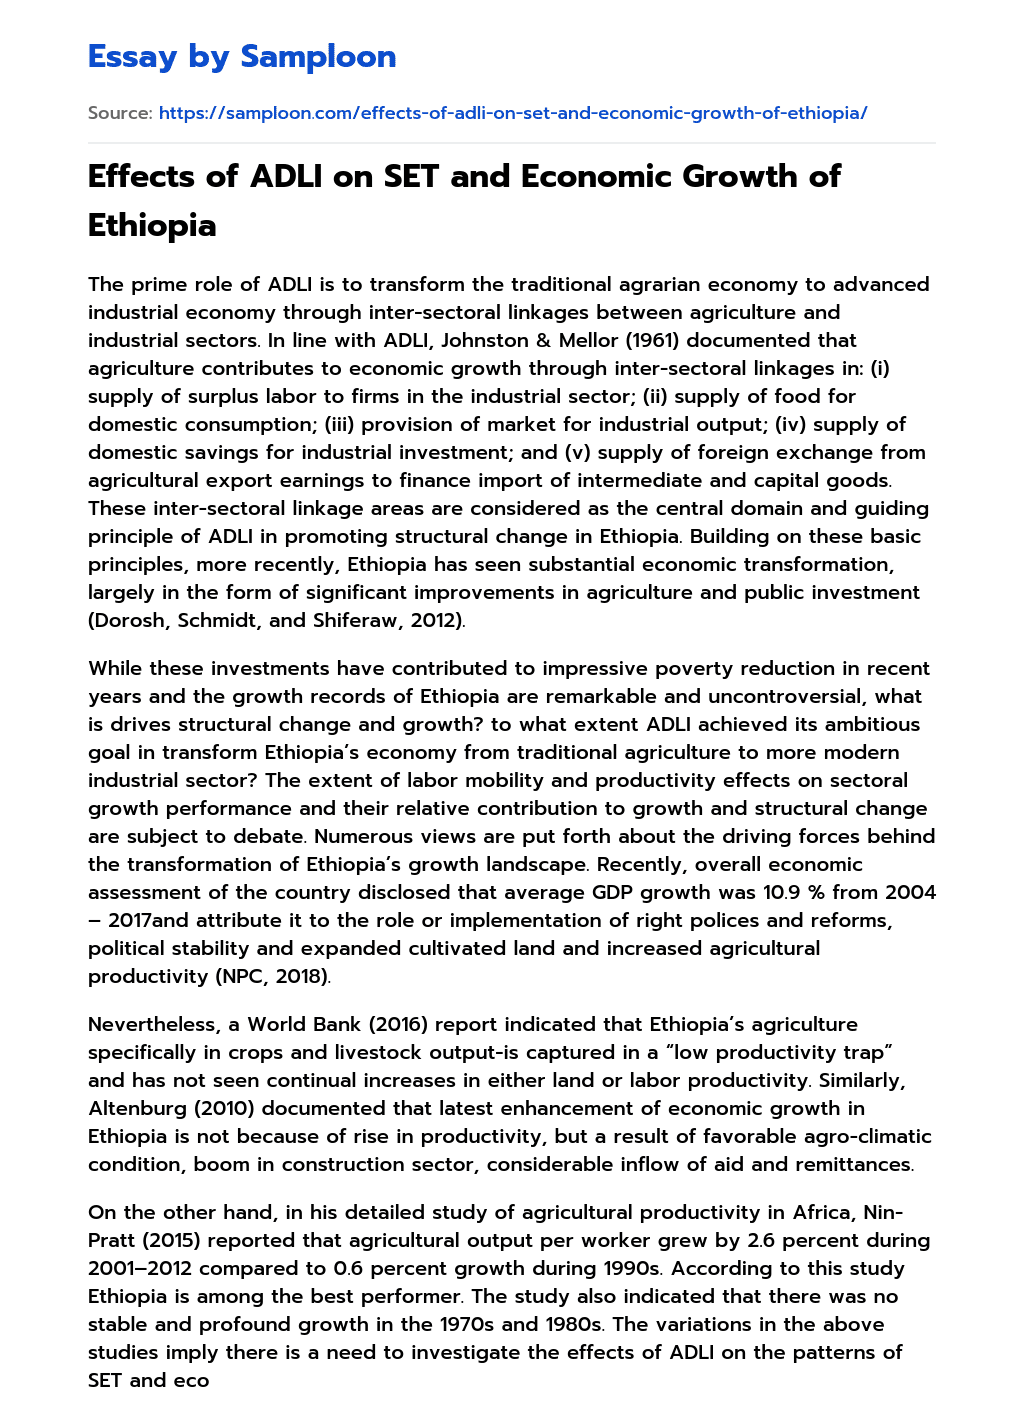 Effects of ADLI on SET and Economic Growth of Ethiopia essay